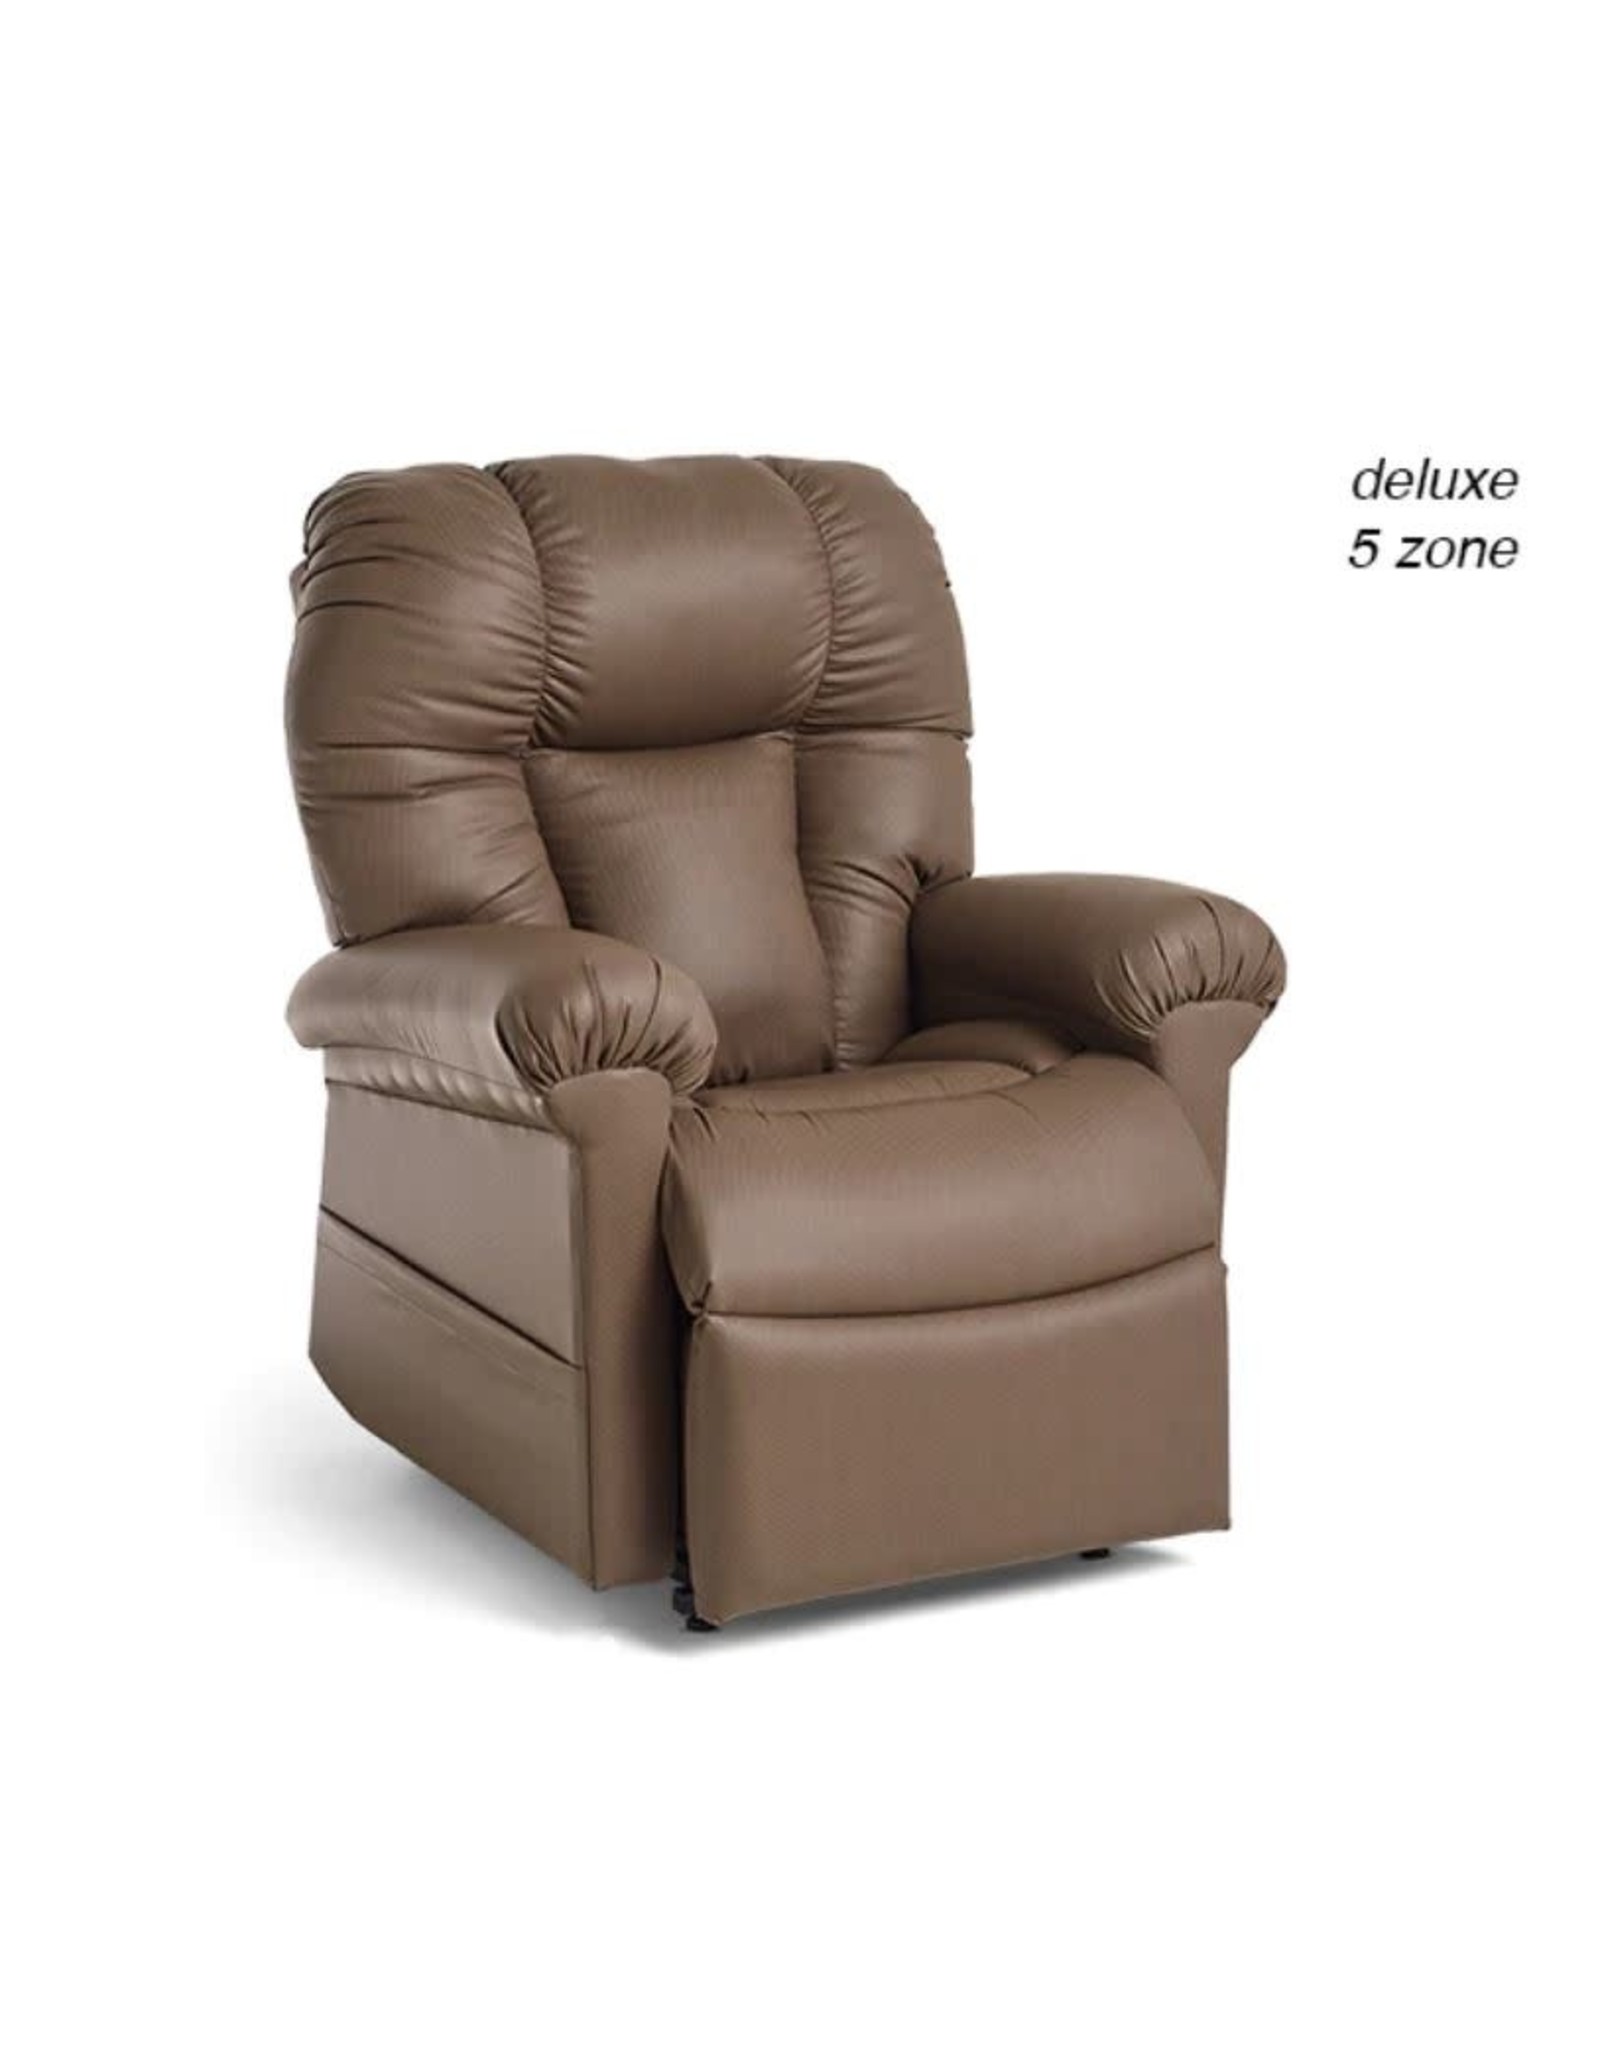 Journey Perfect Sleep Chair  - Deluxe 5 Zone - Miralux Chocolate Spectra